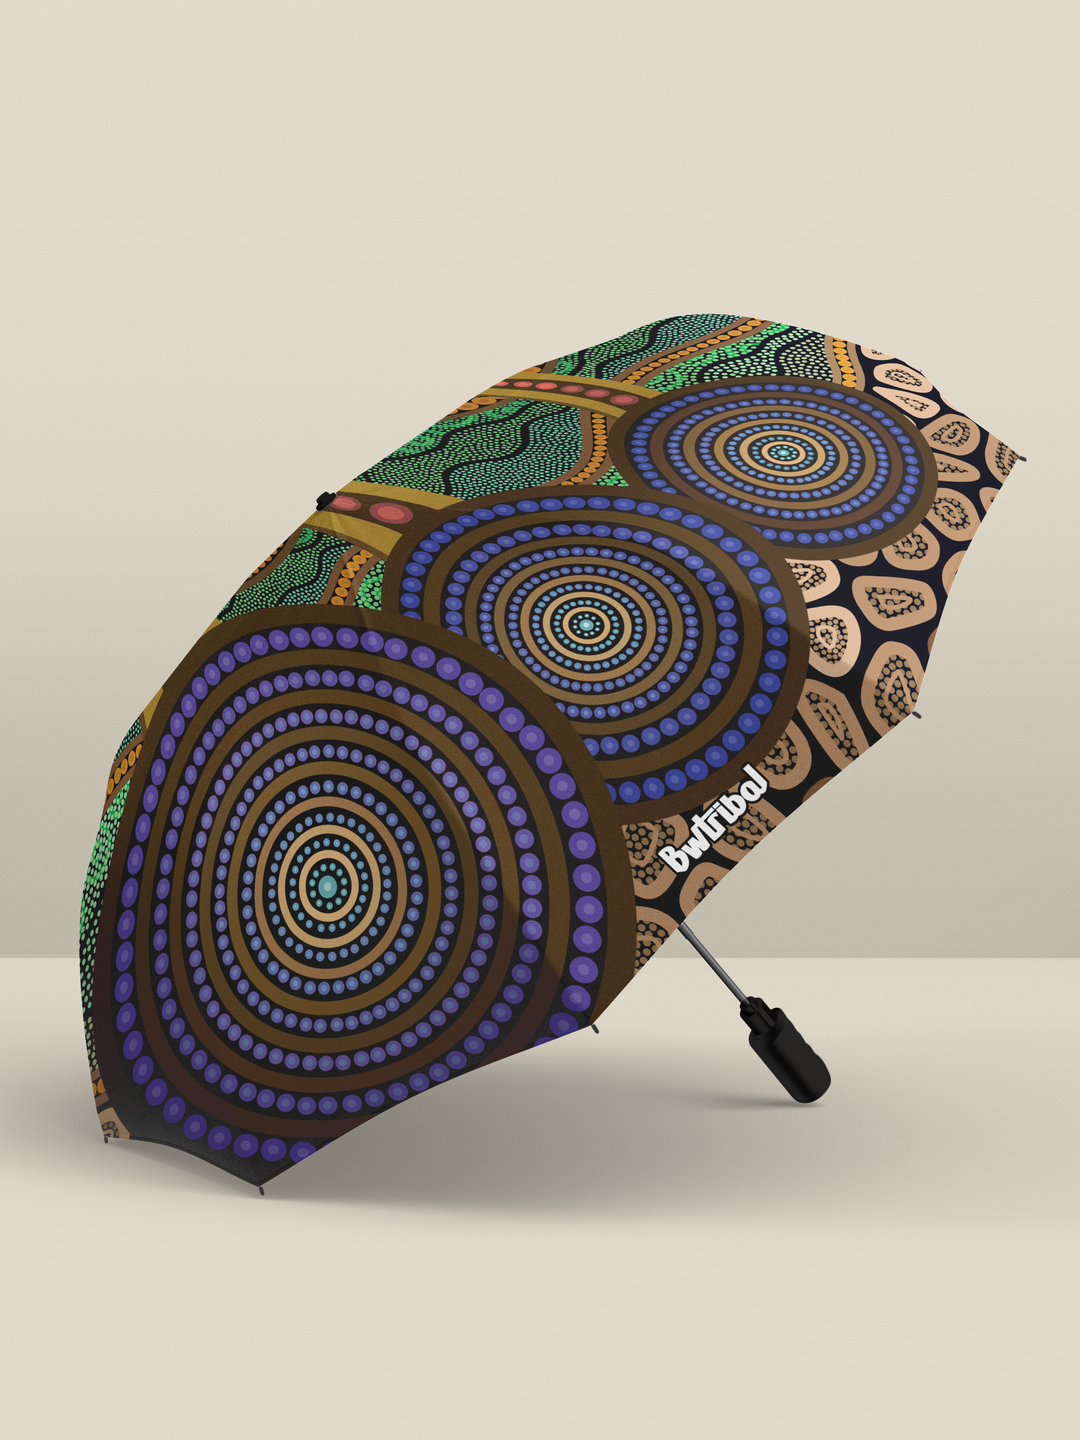 Past, Present, and Future - Umbrella